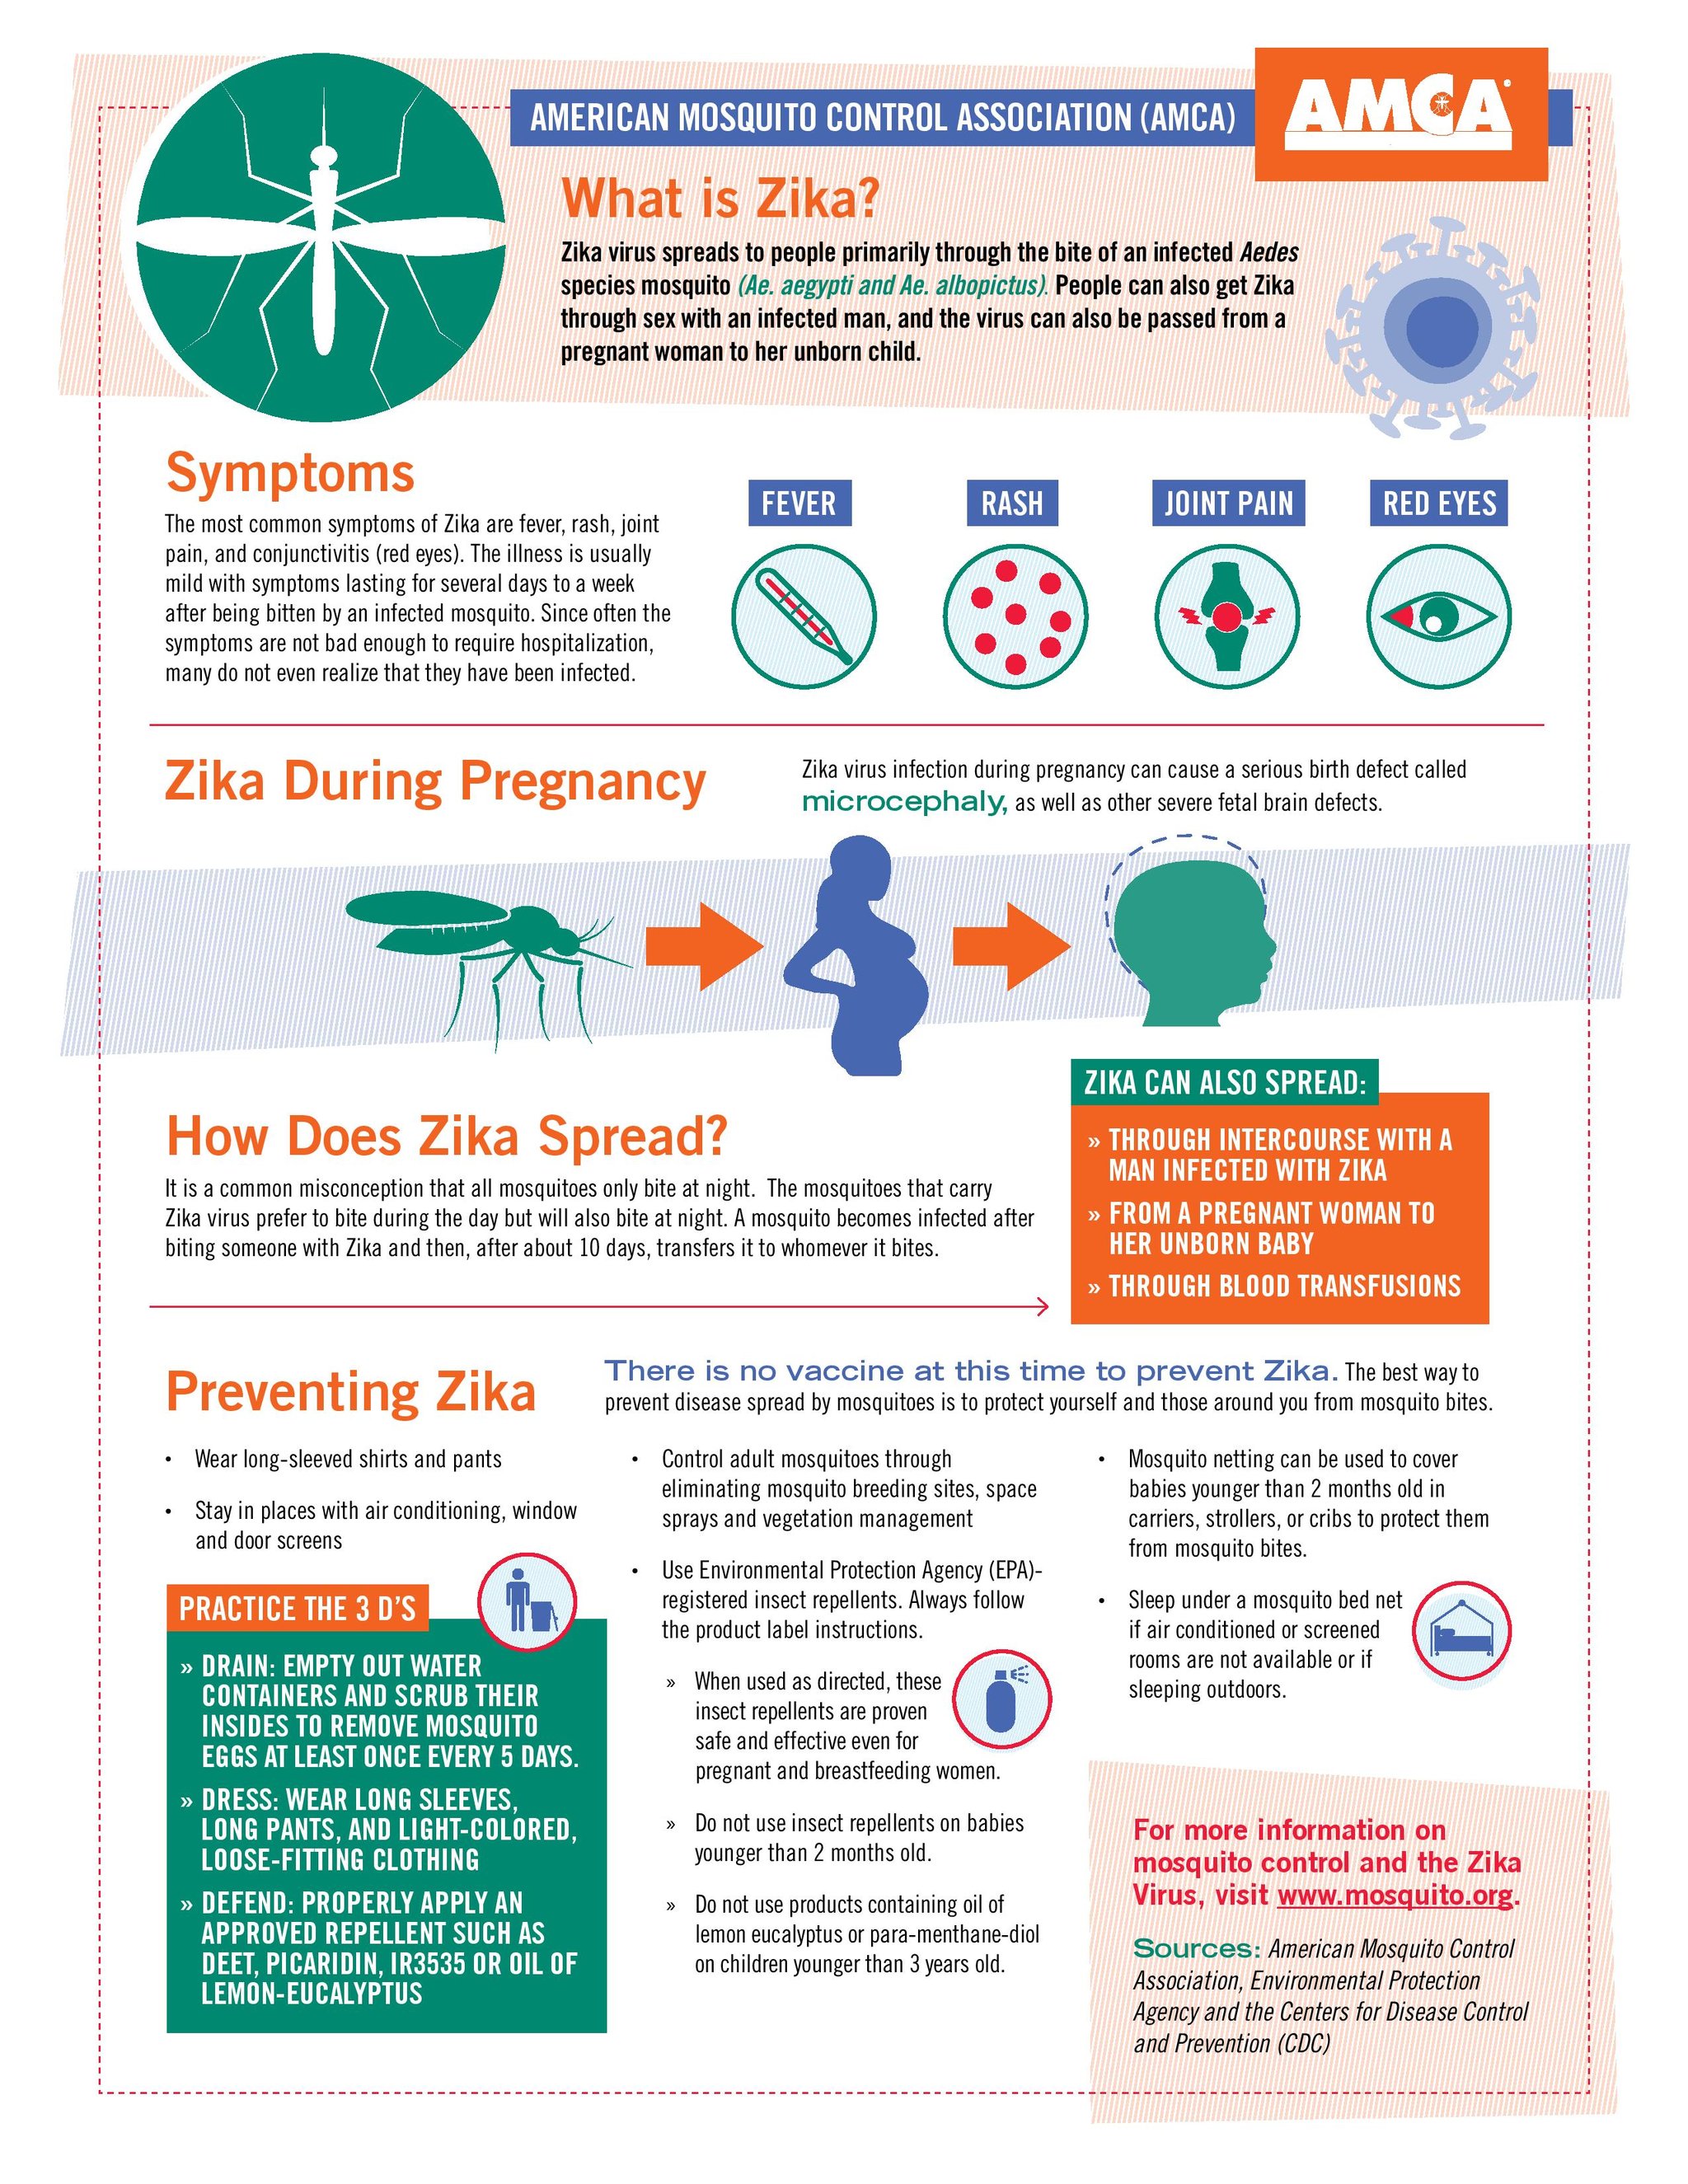 AMCA Release New Zika Fact Sheet